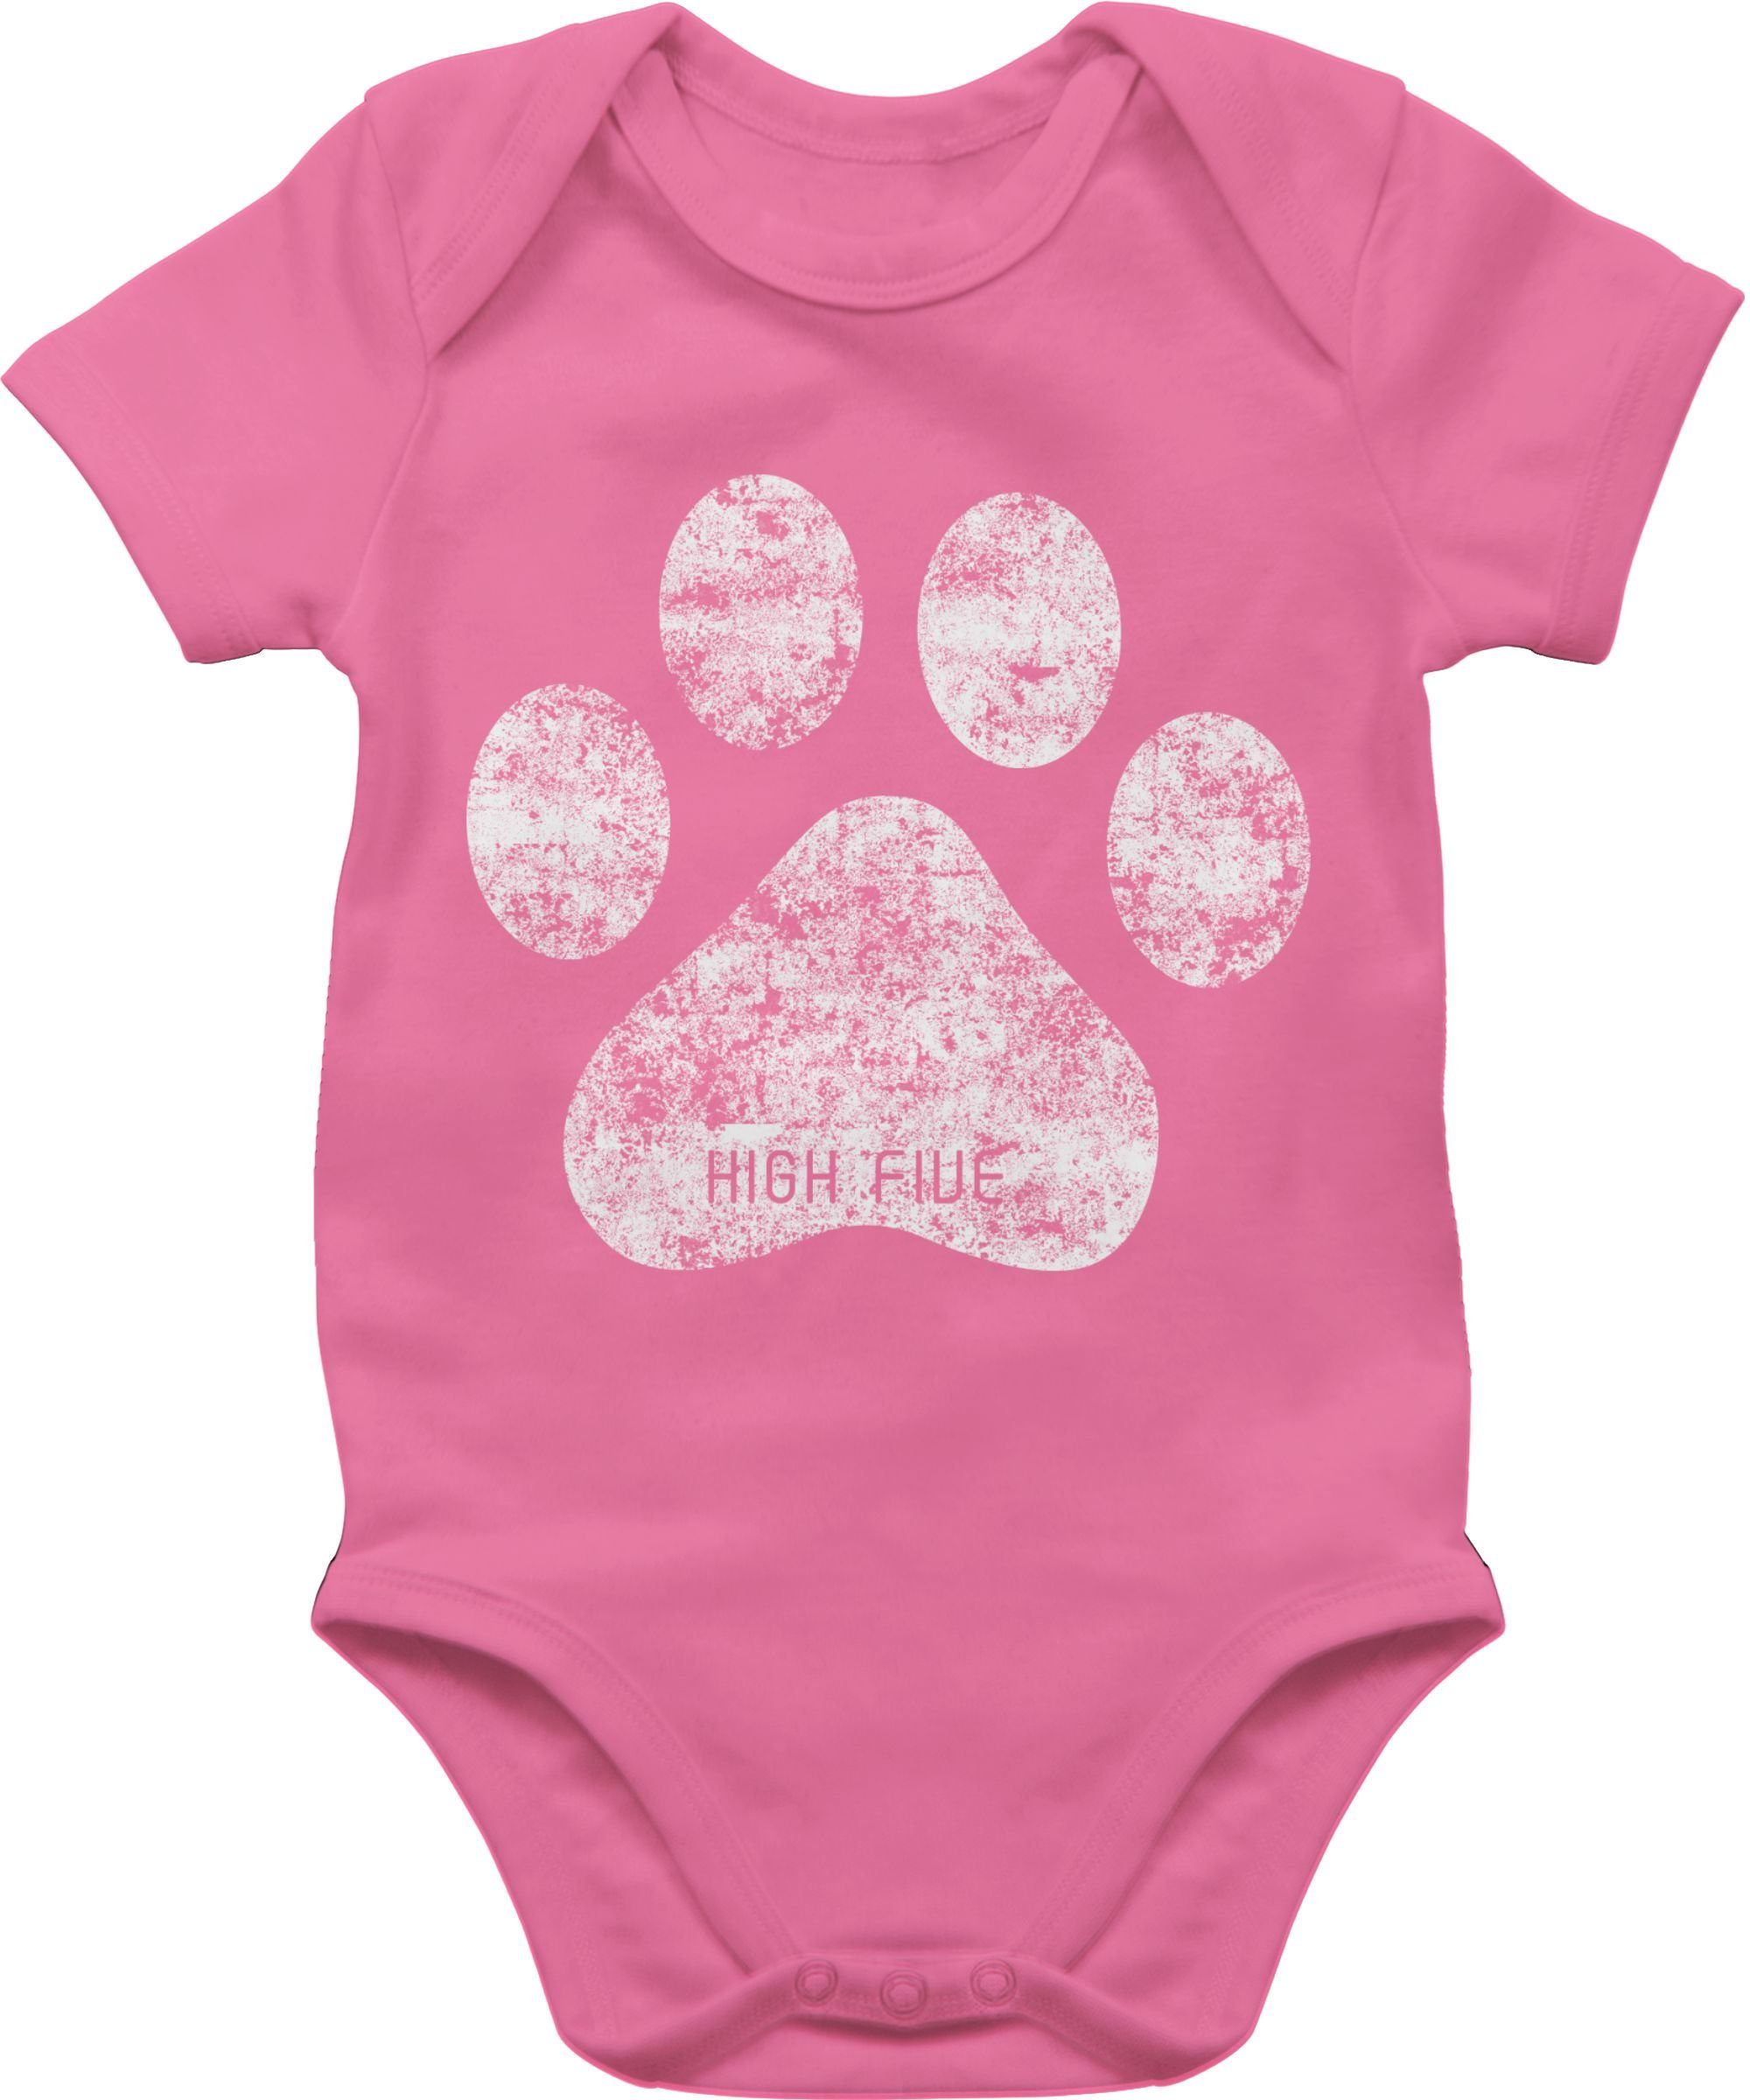 Shirtracer Shirtbody High Five Hunde Pfote Tiermotiv Animal Print Baby 1 Pink